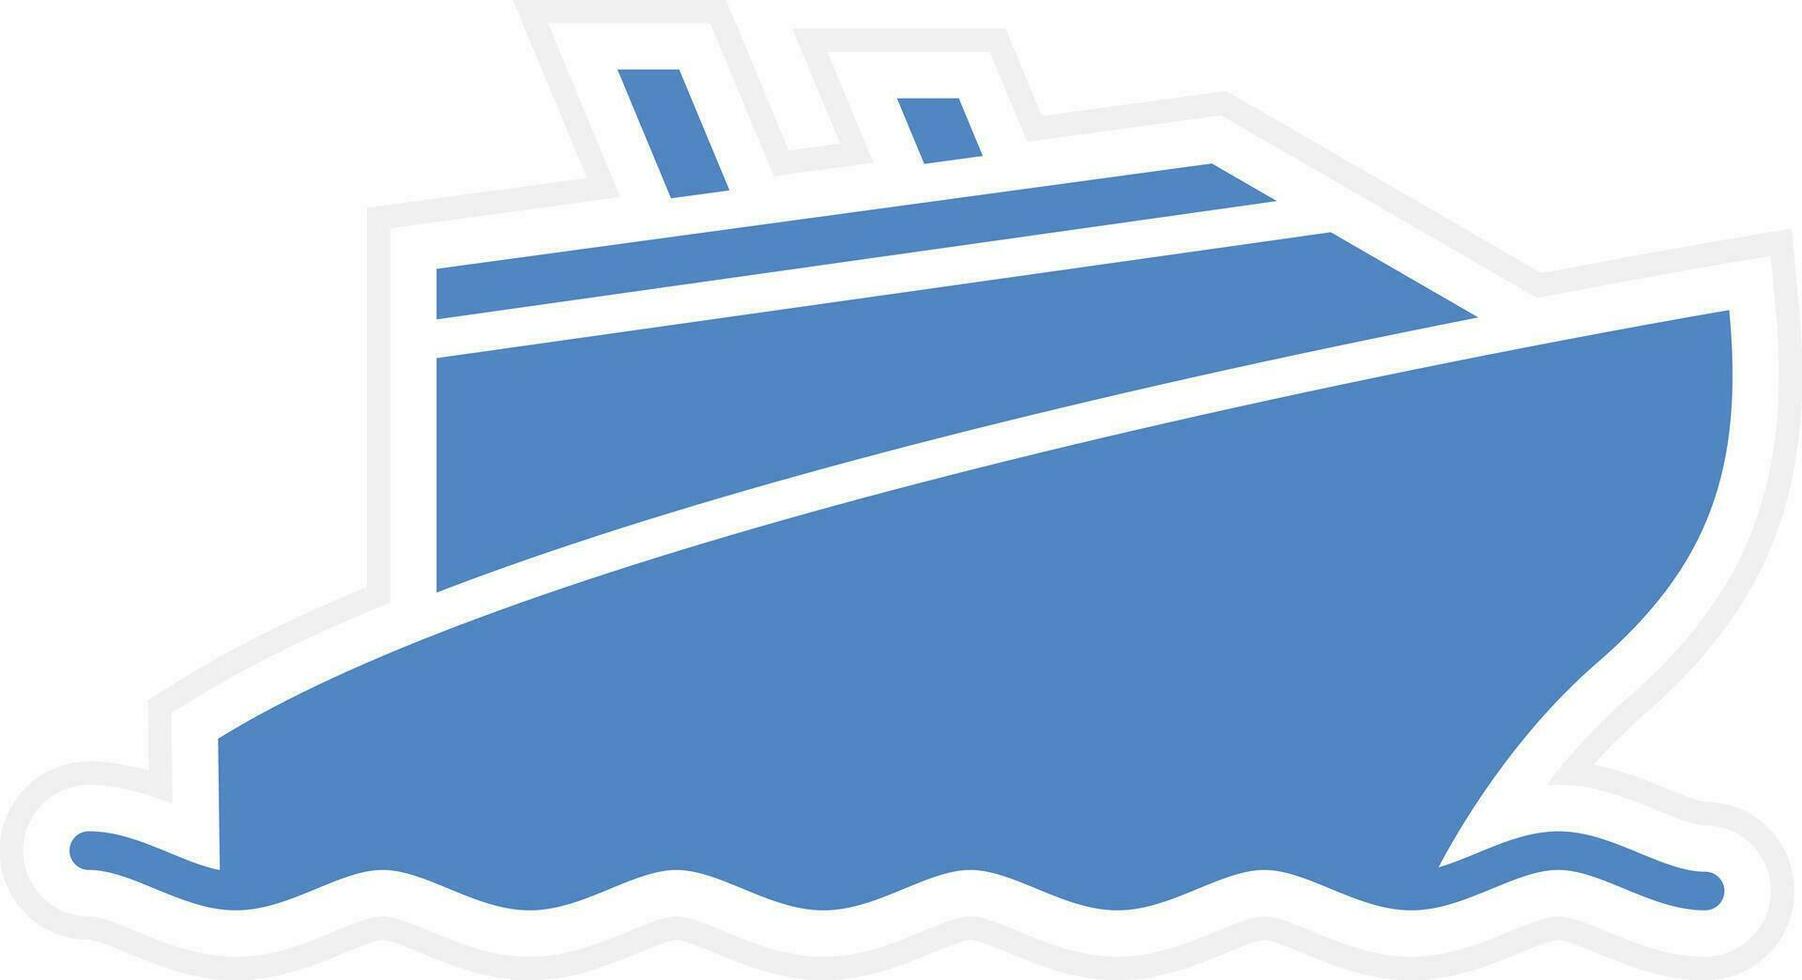 yachting vecteur icône